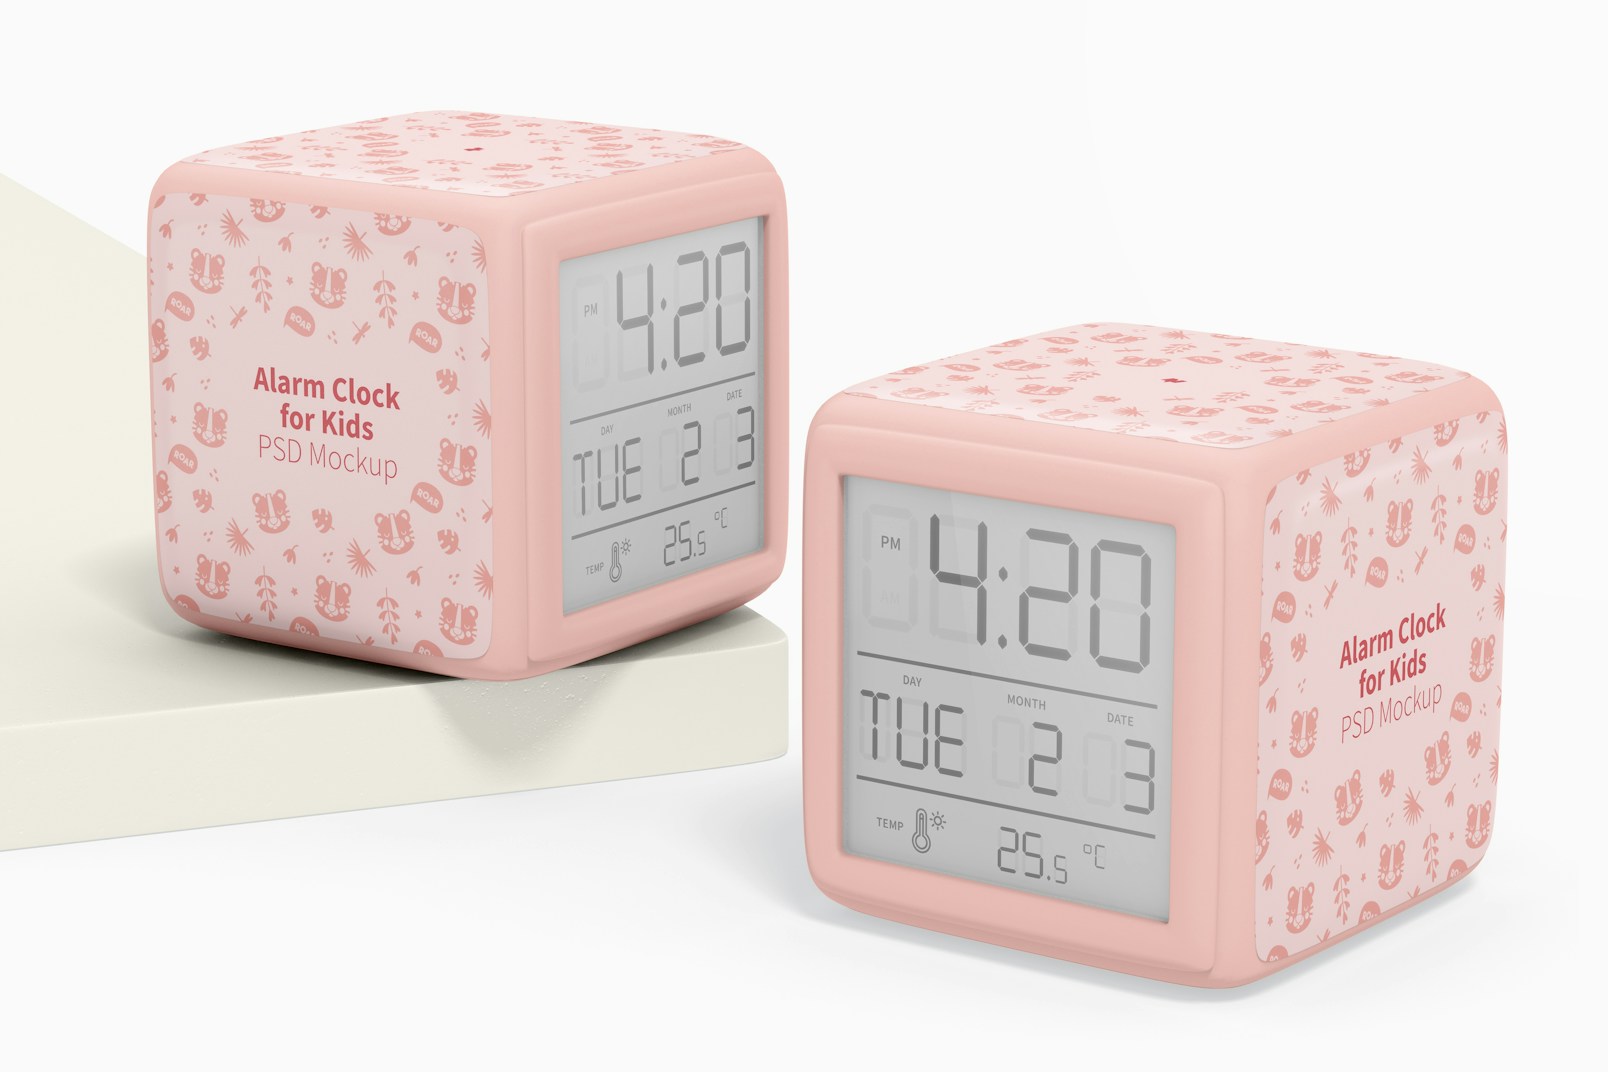 Alarm Clocks for Kids Mockup, Perspective